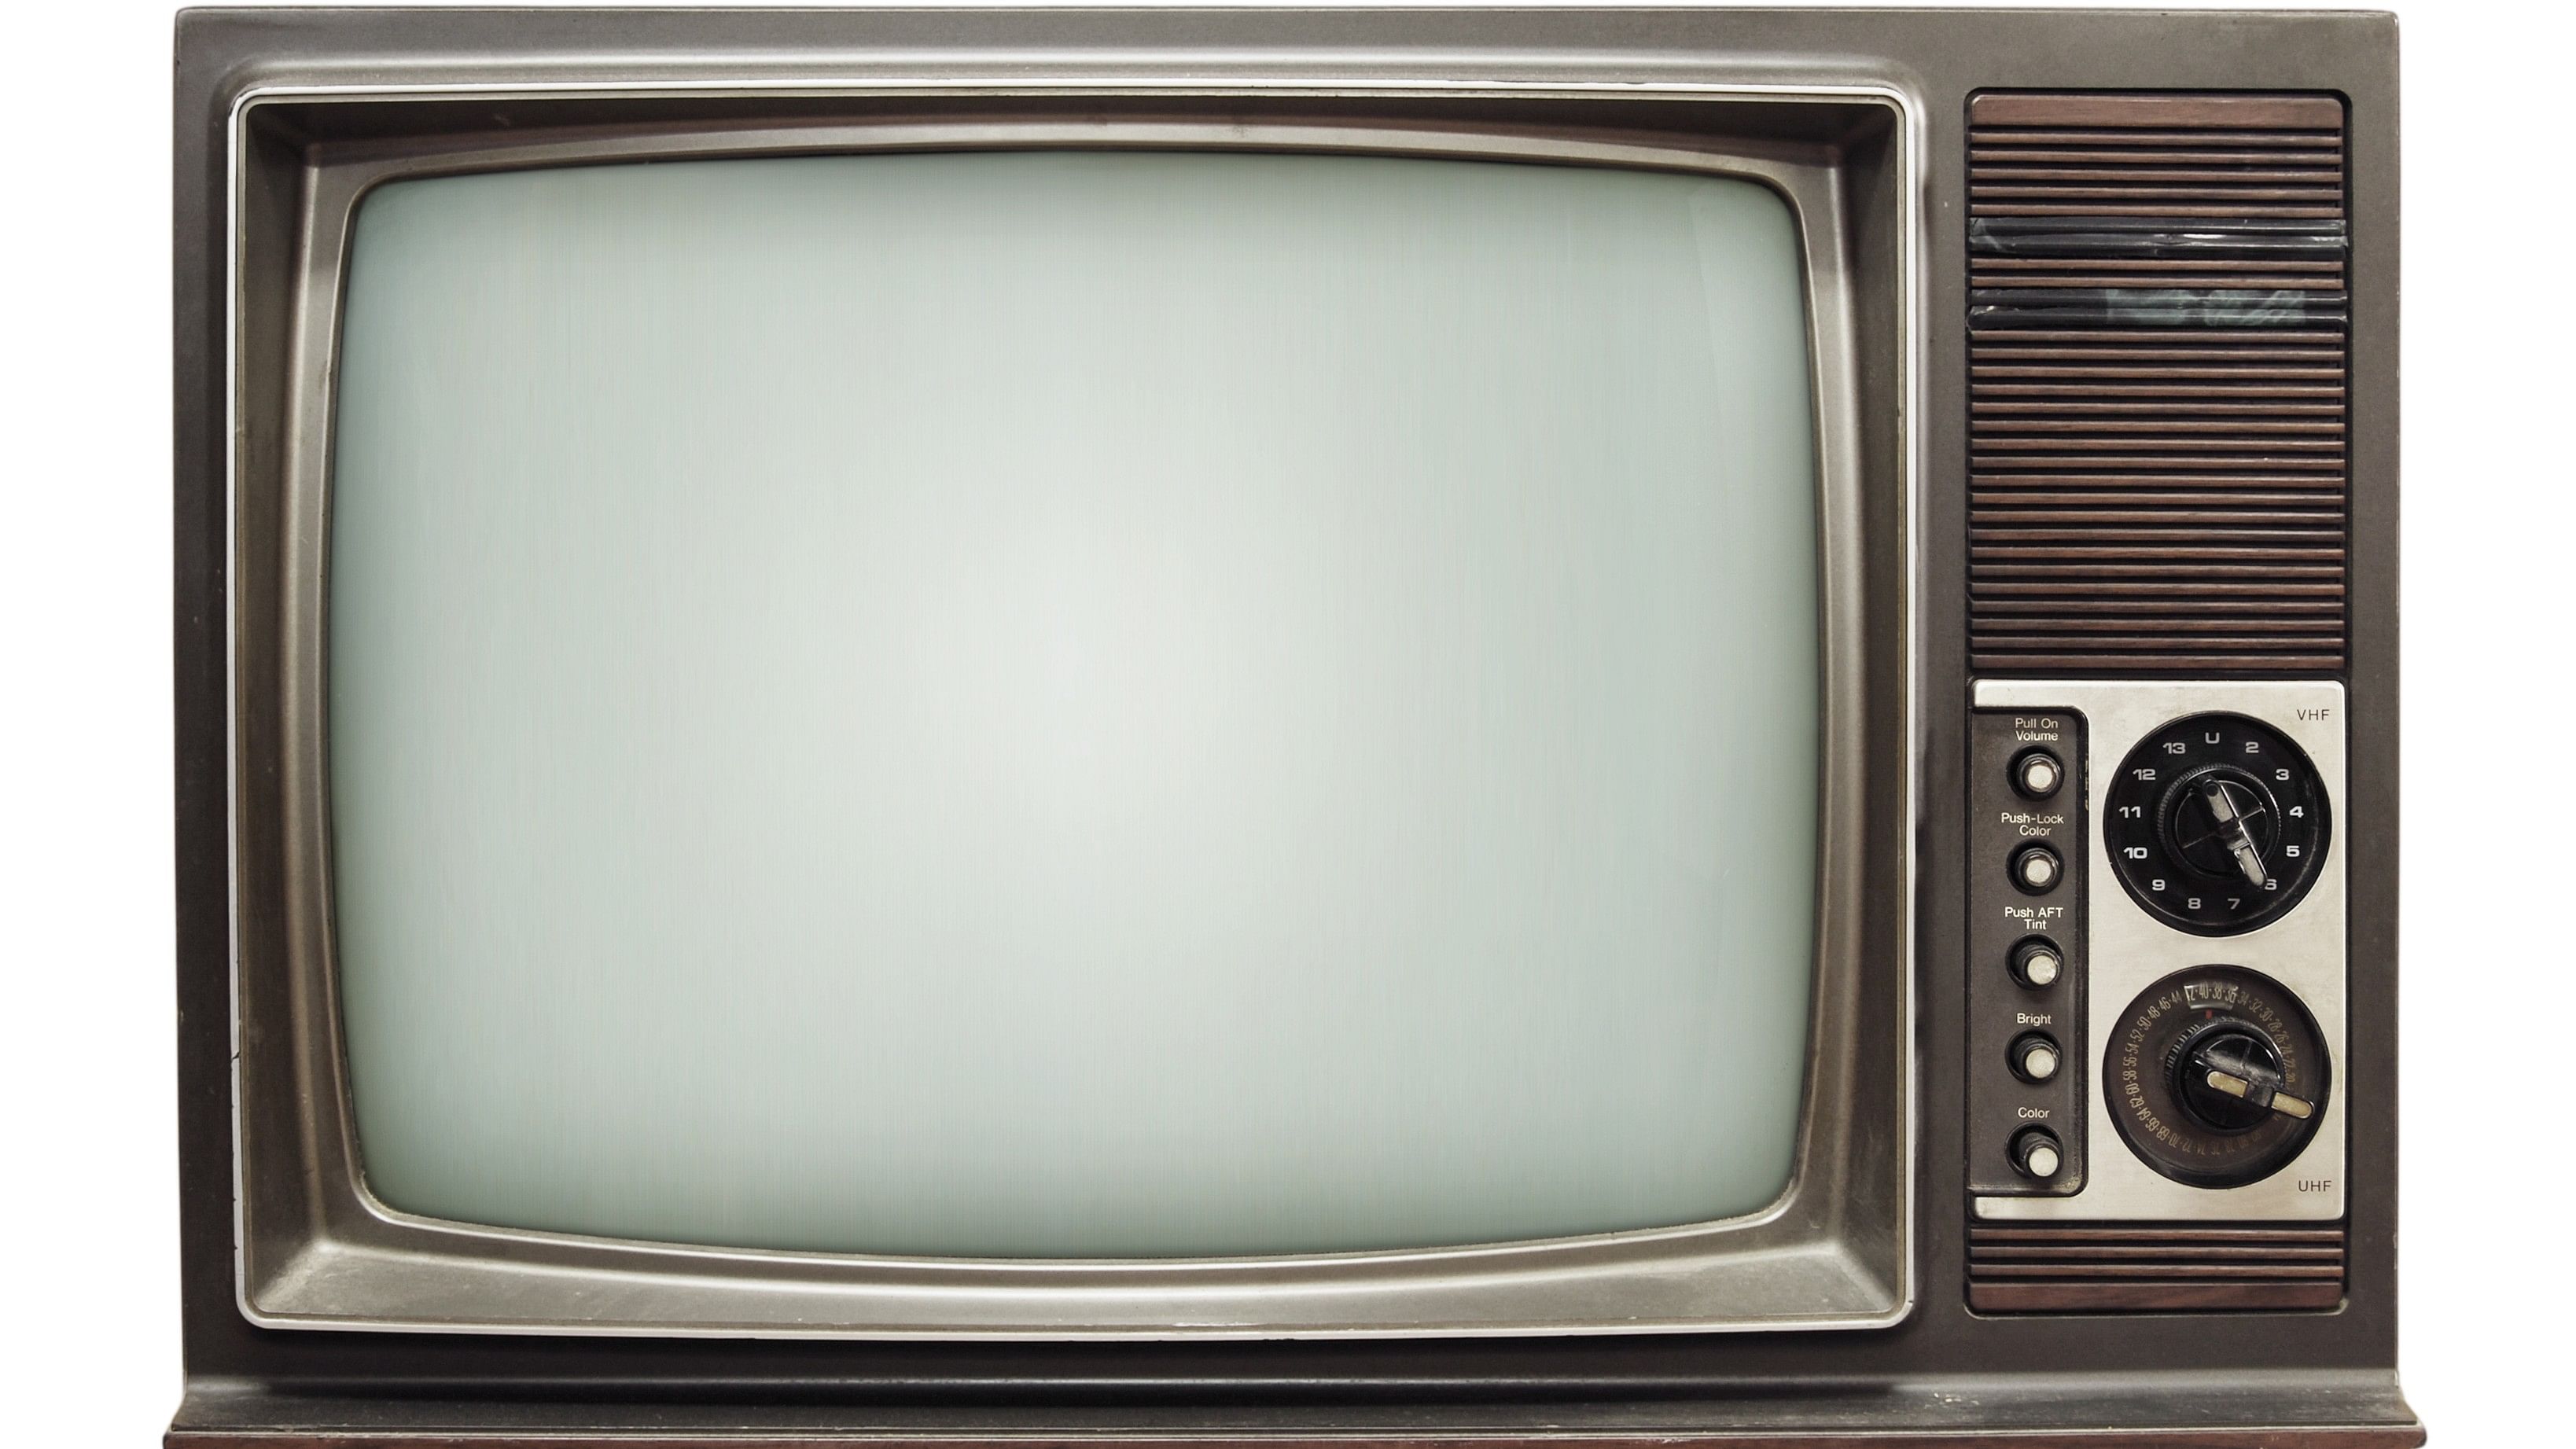 <div class="paragraphs"><p>Representative image of vintage TV set.</p></div>